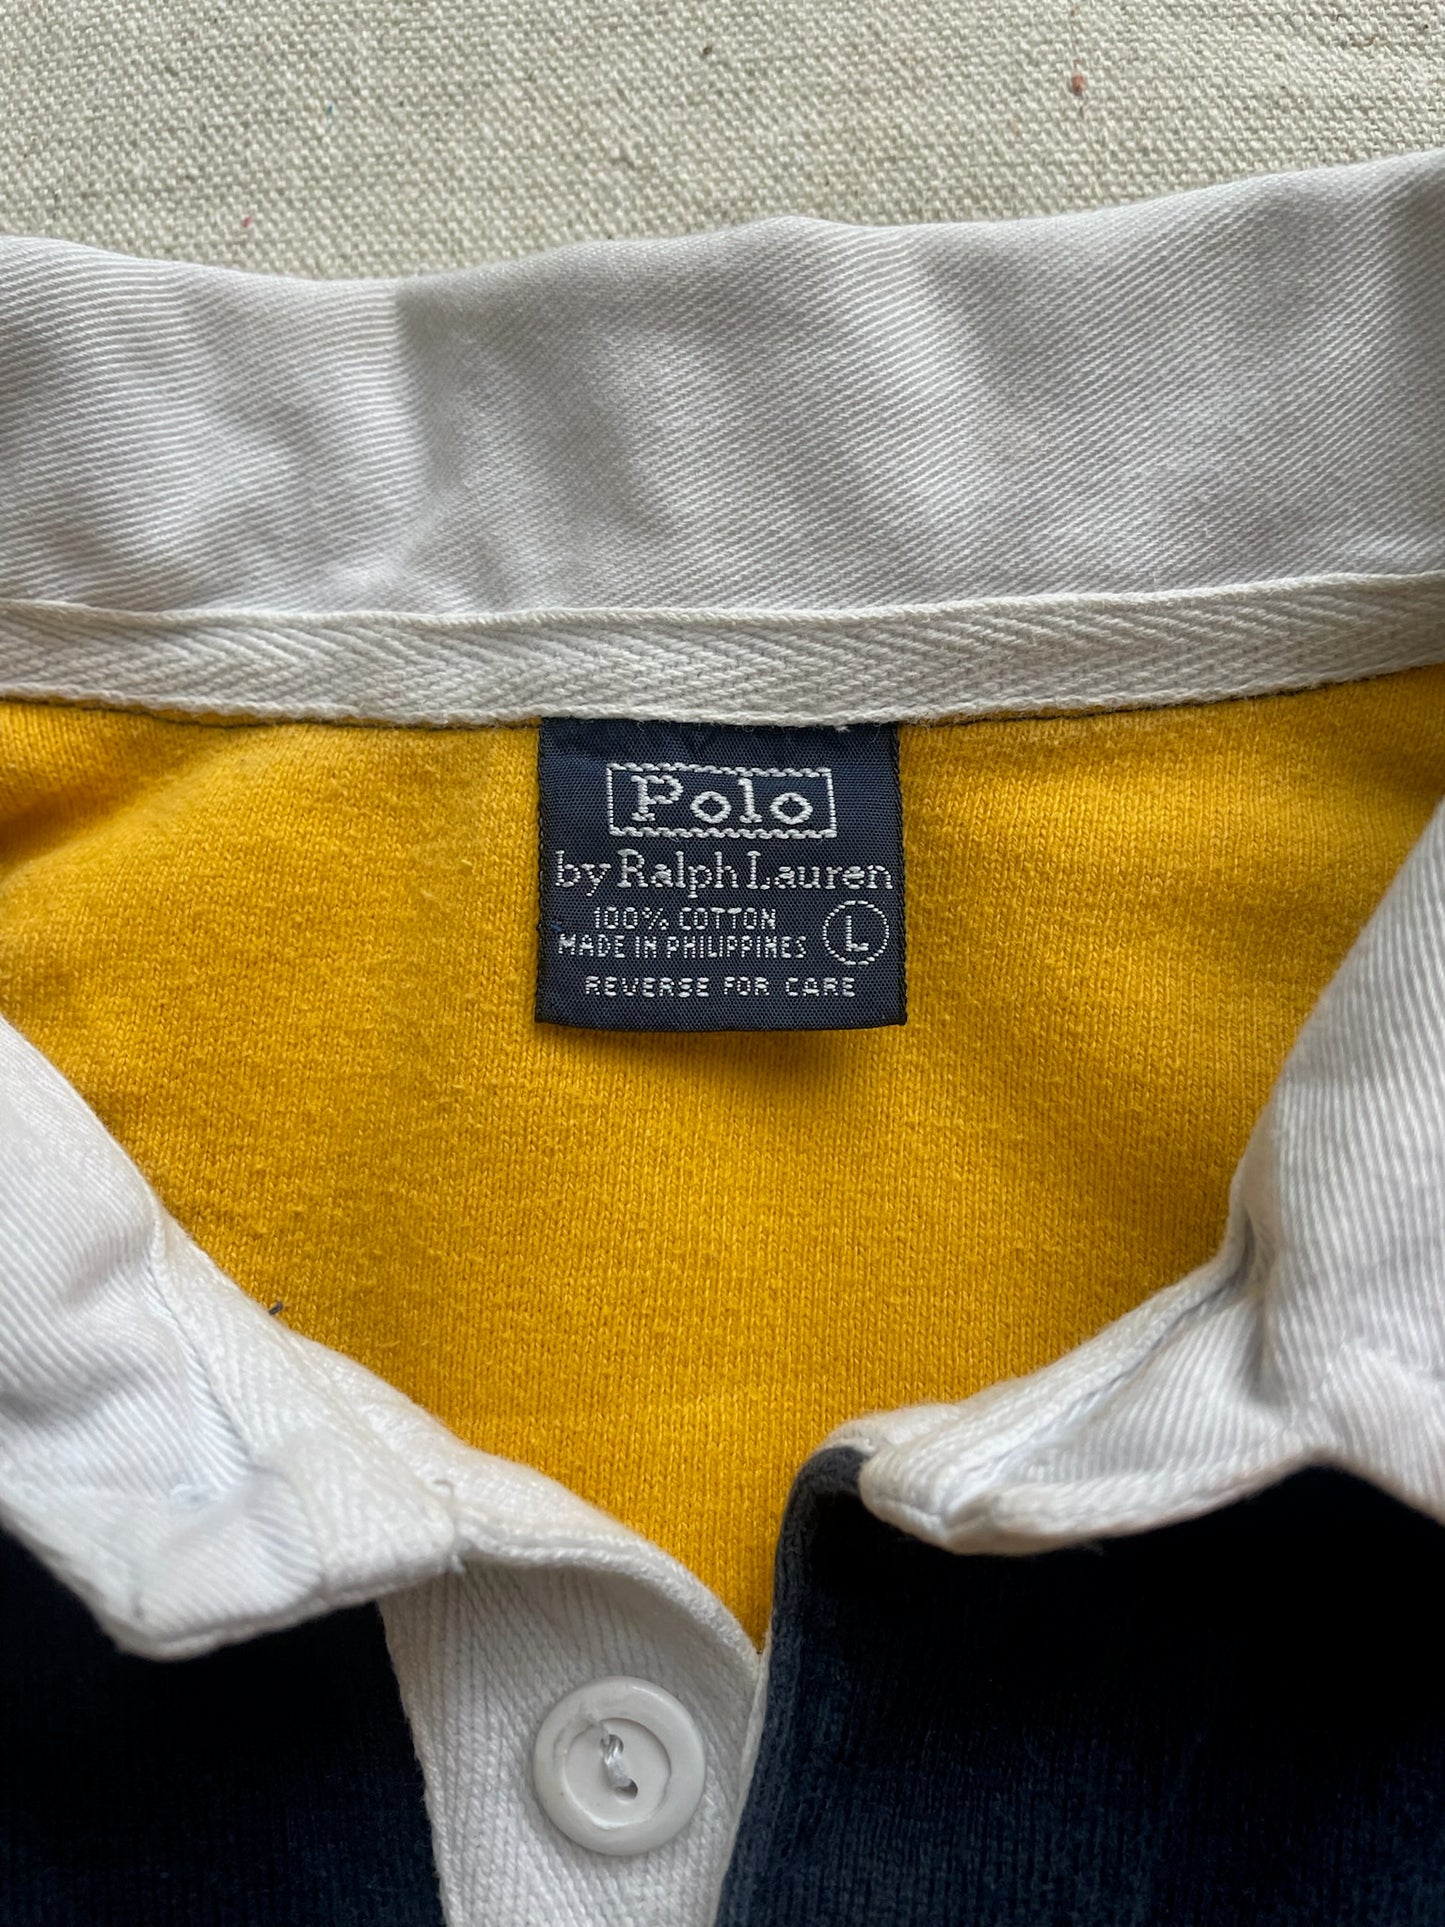 Polo Ralph Lauren Striped Rugby Shirt—[M]